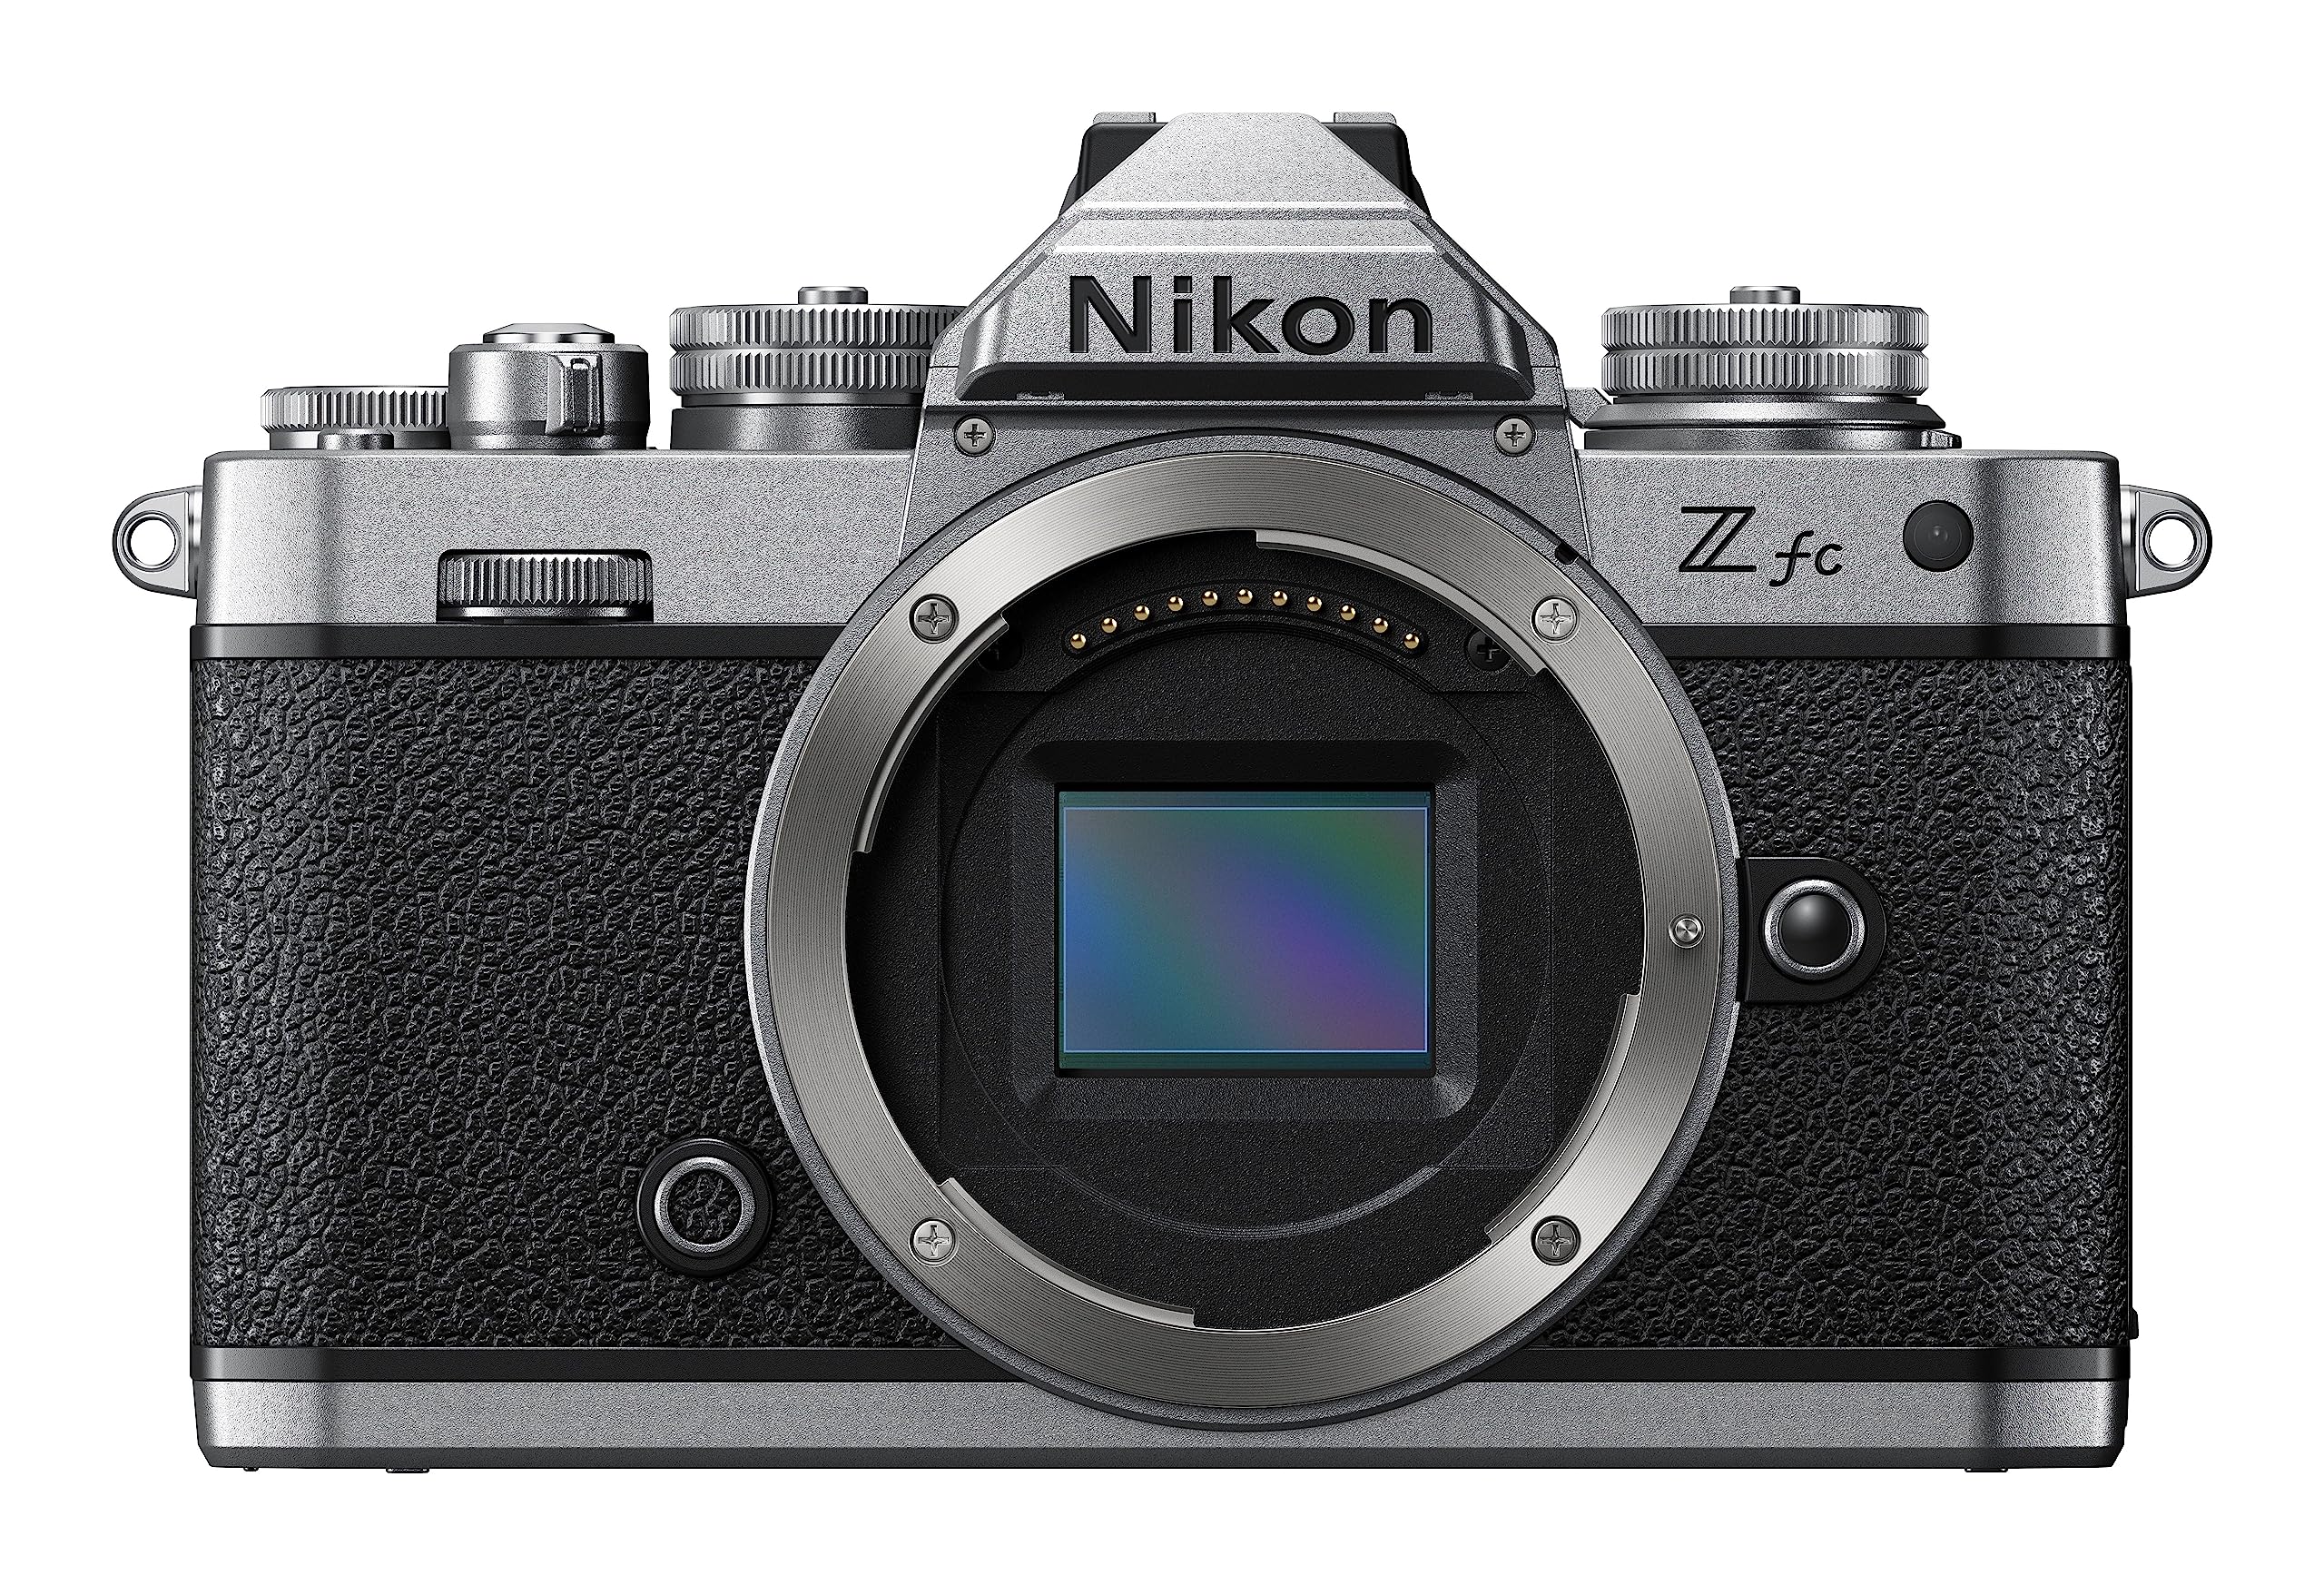 Nikon Z fc | Retro-Inspired Compact mirrorless Stills/Video Camera | Nikon USA Model